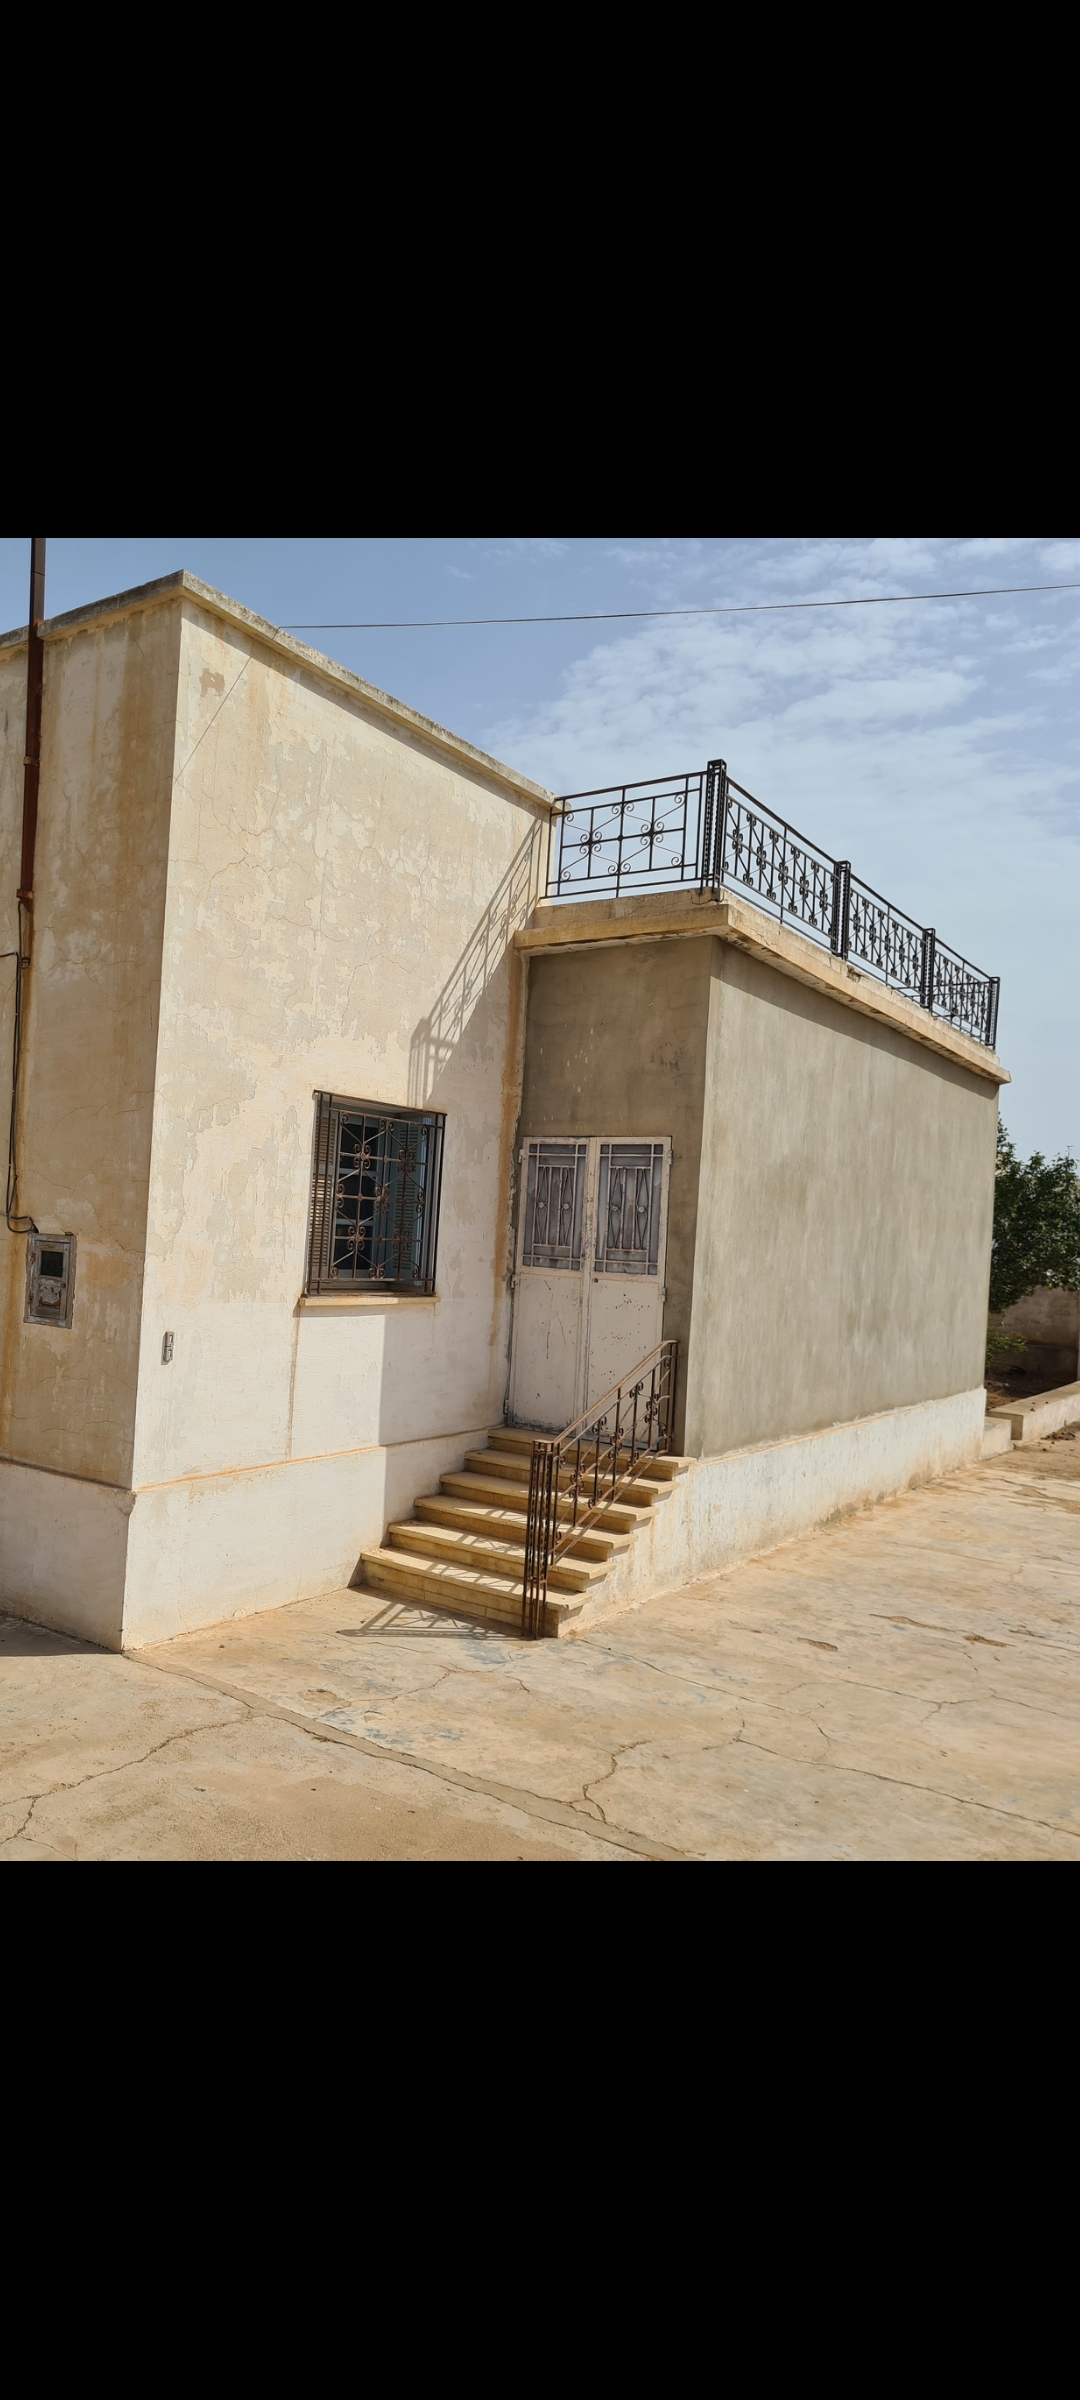 Sakiet Ezzit Merkez Chihya Location Surfaces Grande maison  bien situe chihia sfax